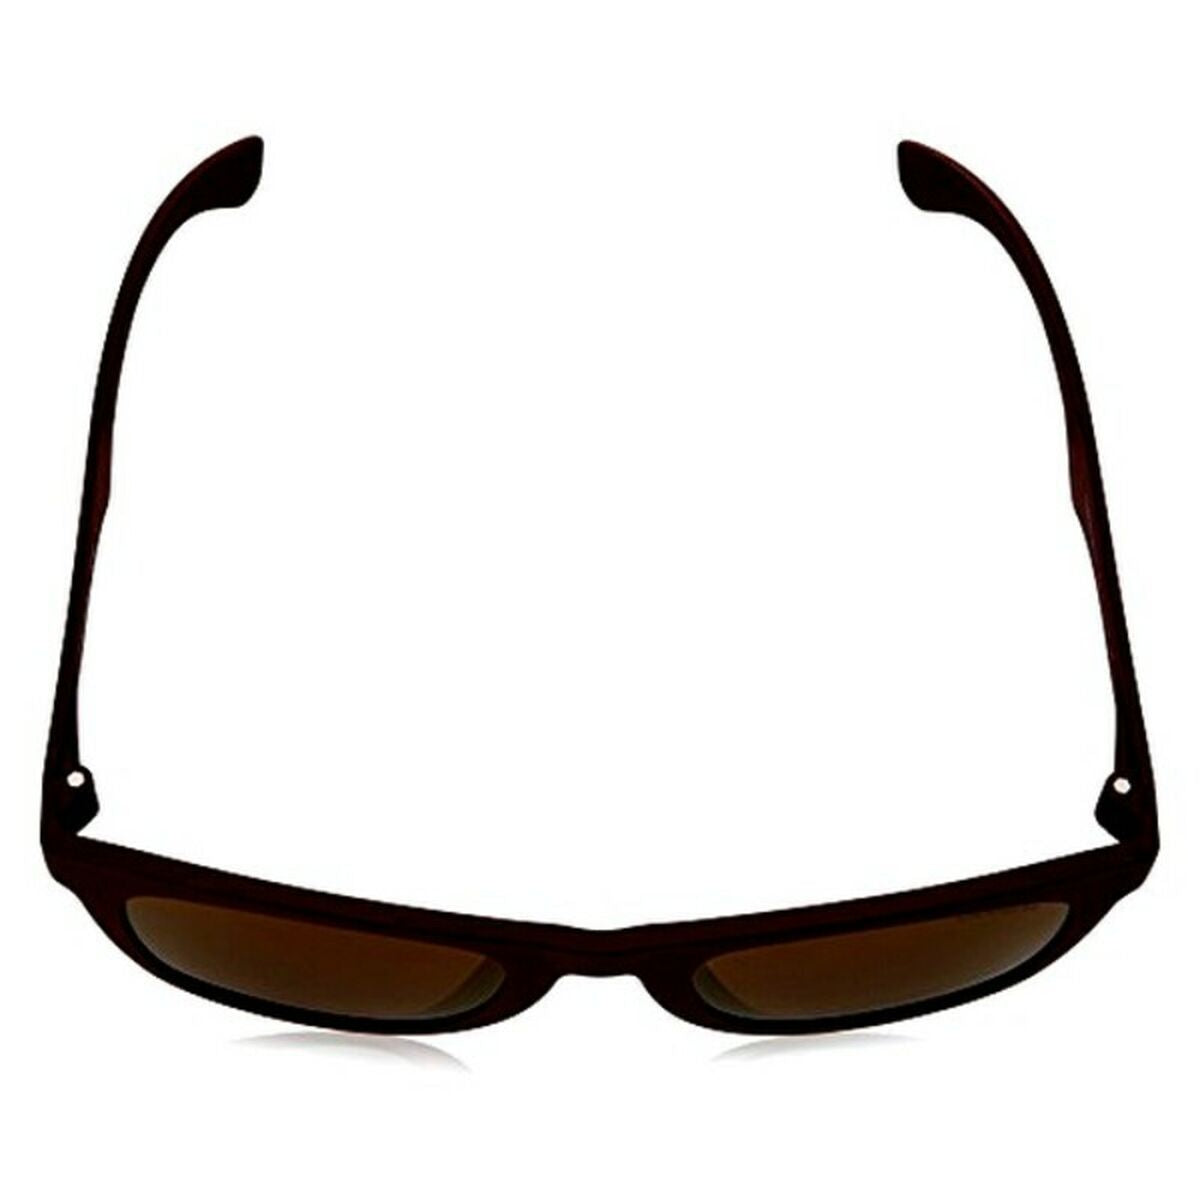 Men's Sunglasses Carrera